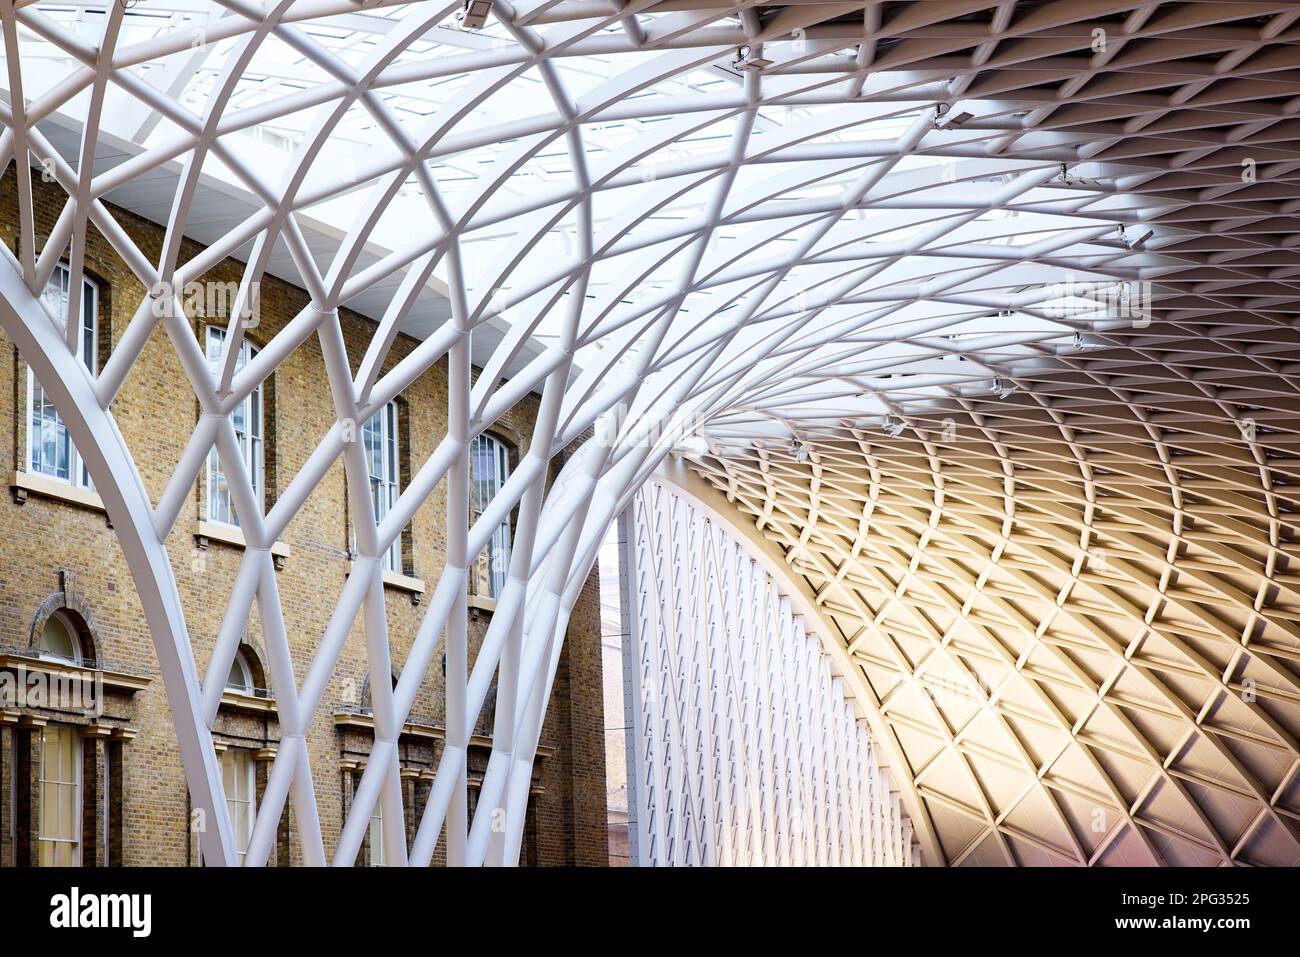 Kings Cross Station - London Stockfoto